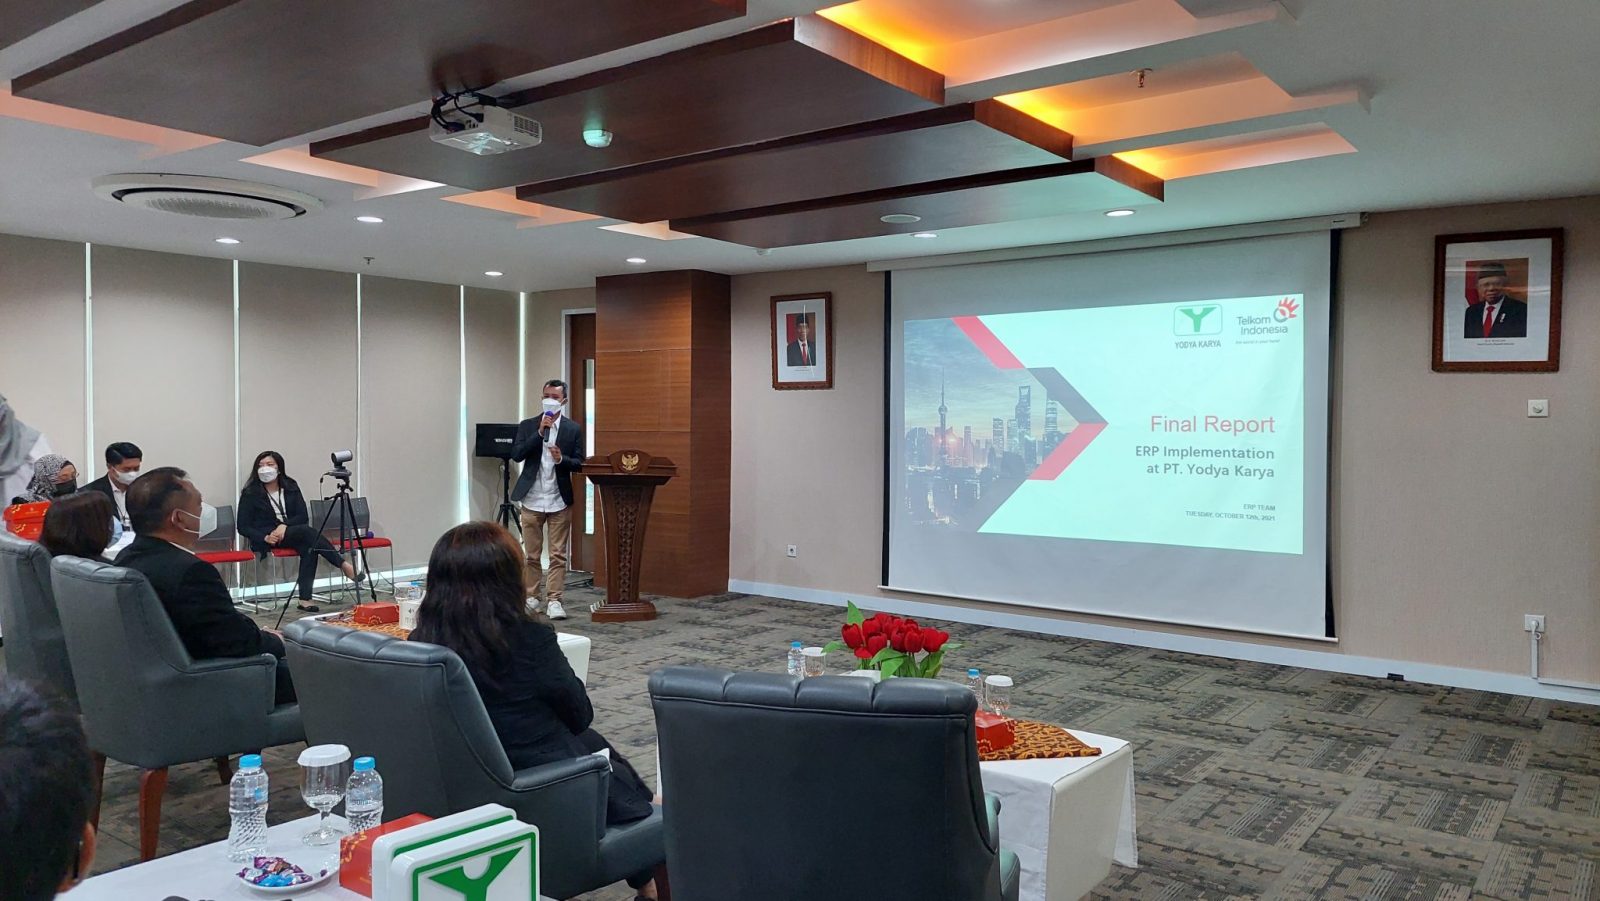 Presentation of the ERP Implementation Final Report at PT Yodya Karya (Persero)